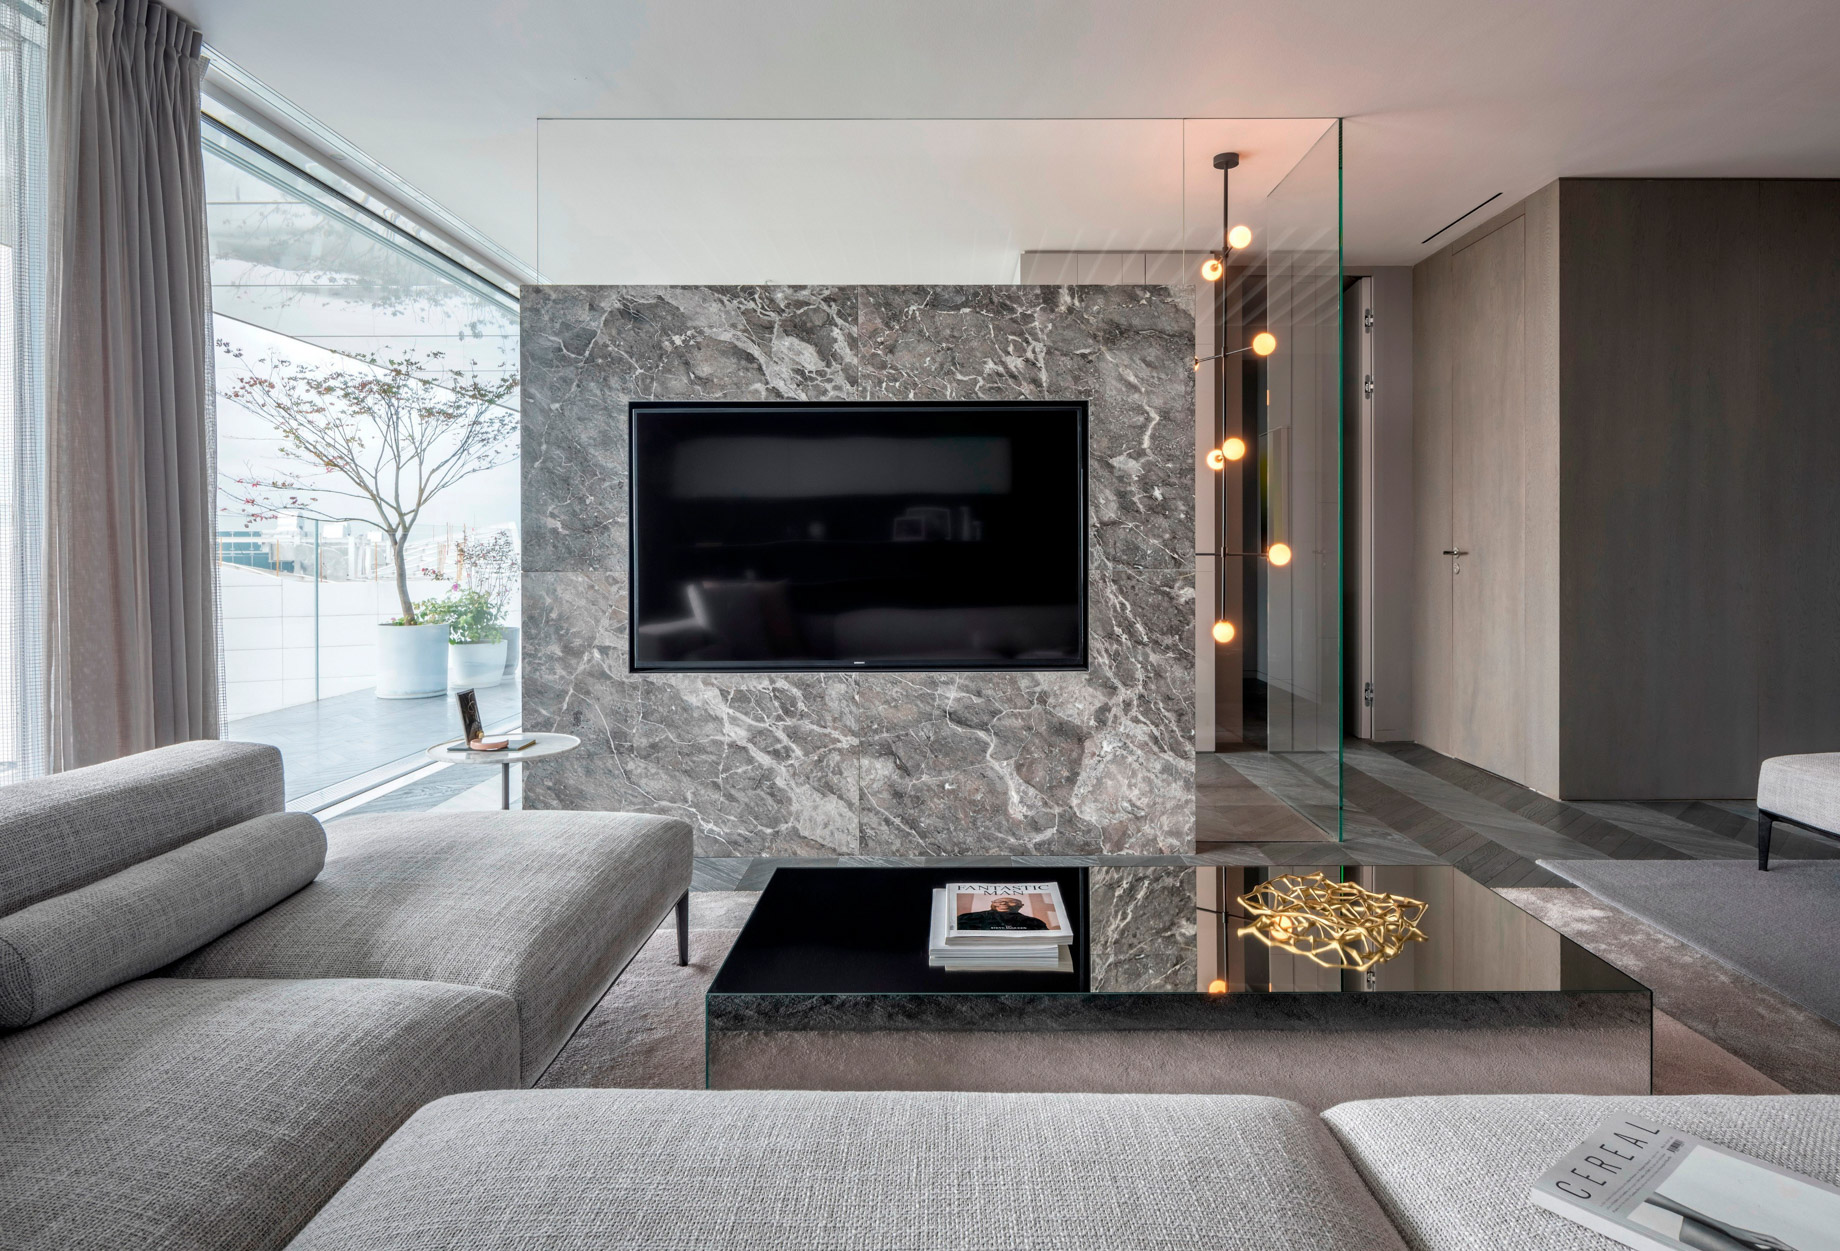 Shades of Grey Apartment Interior Design Shanghai, China - Ippolito Fleitz Group - Living Room Wall TV Insert